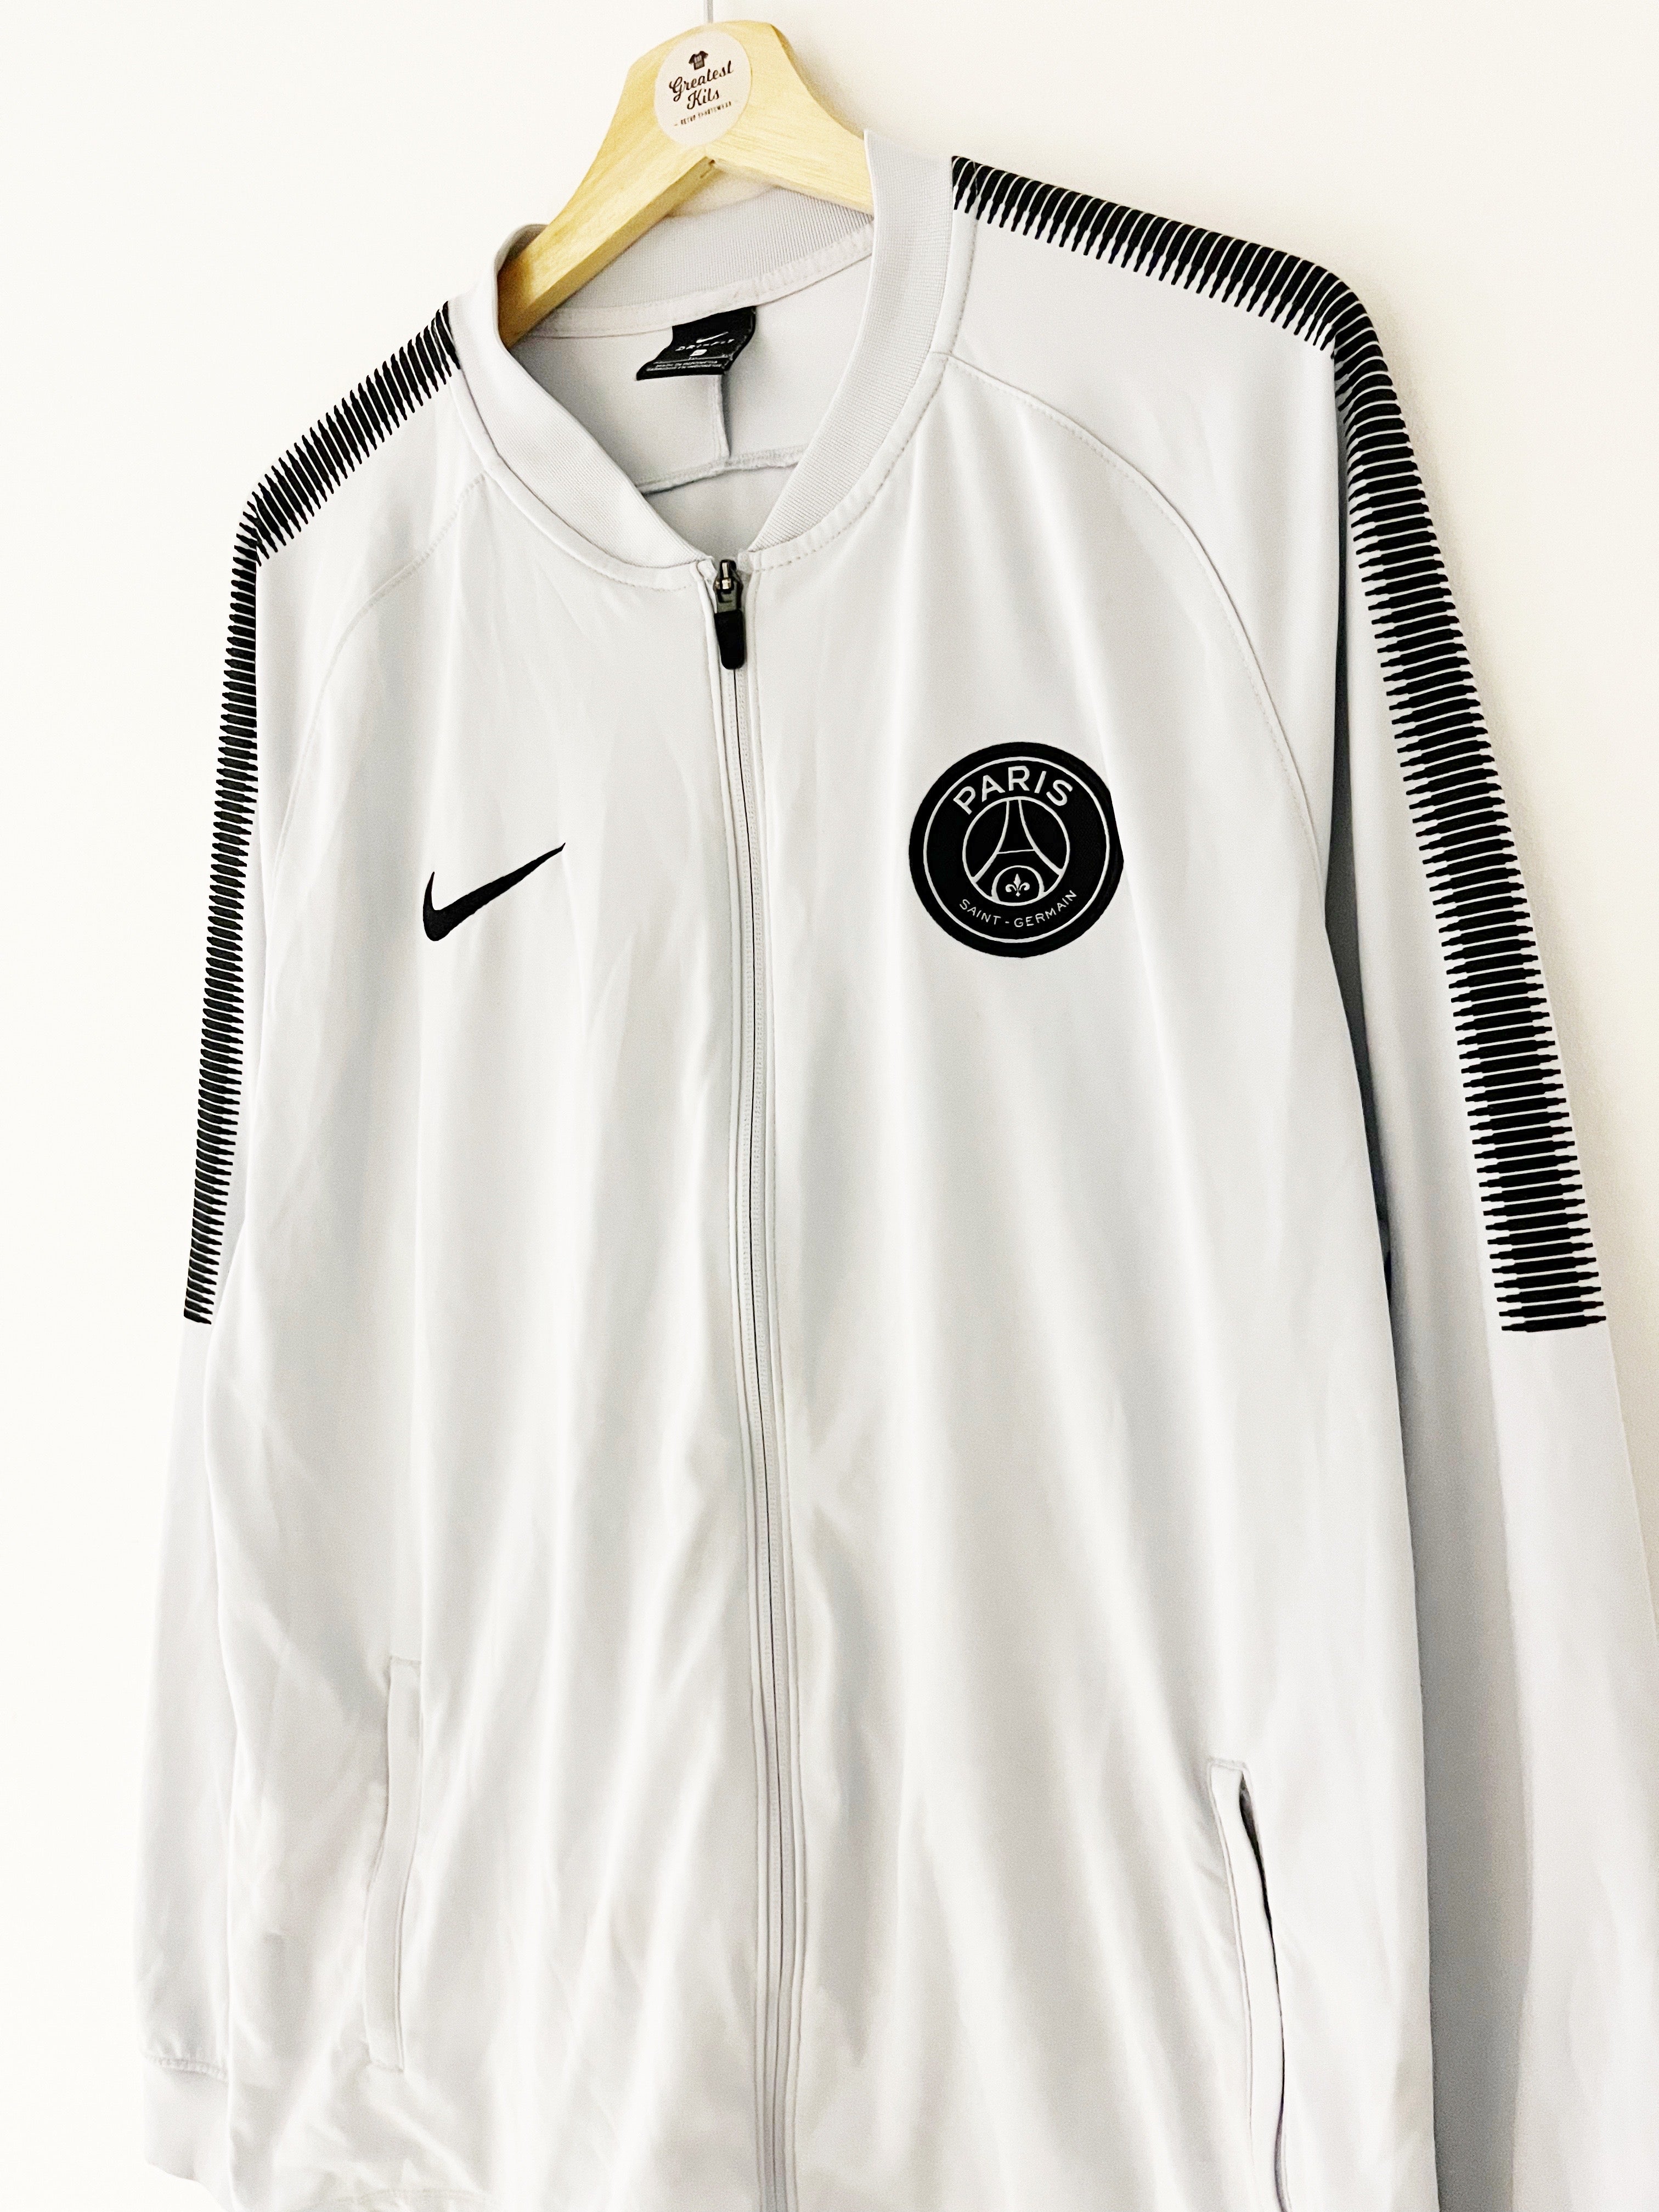 2017/18 Paris Saint-Germain Training Jacket (XL) 9/10